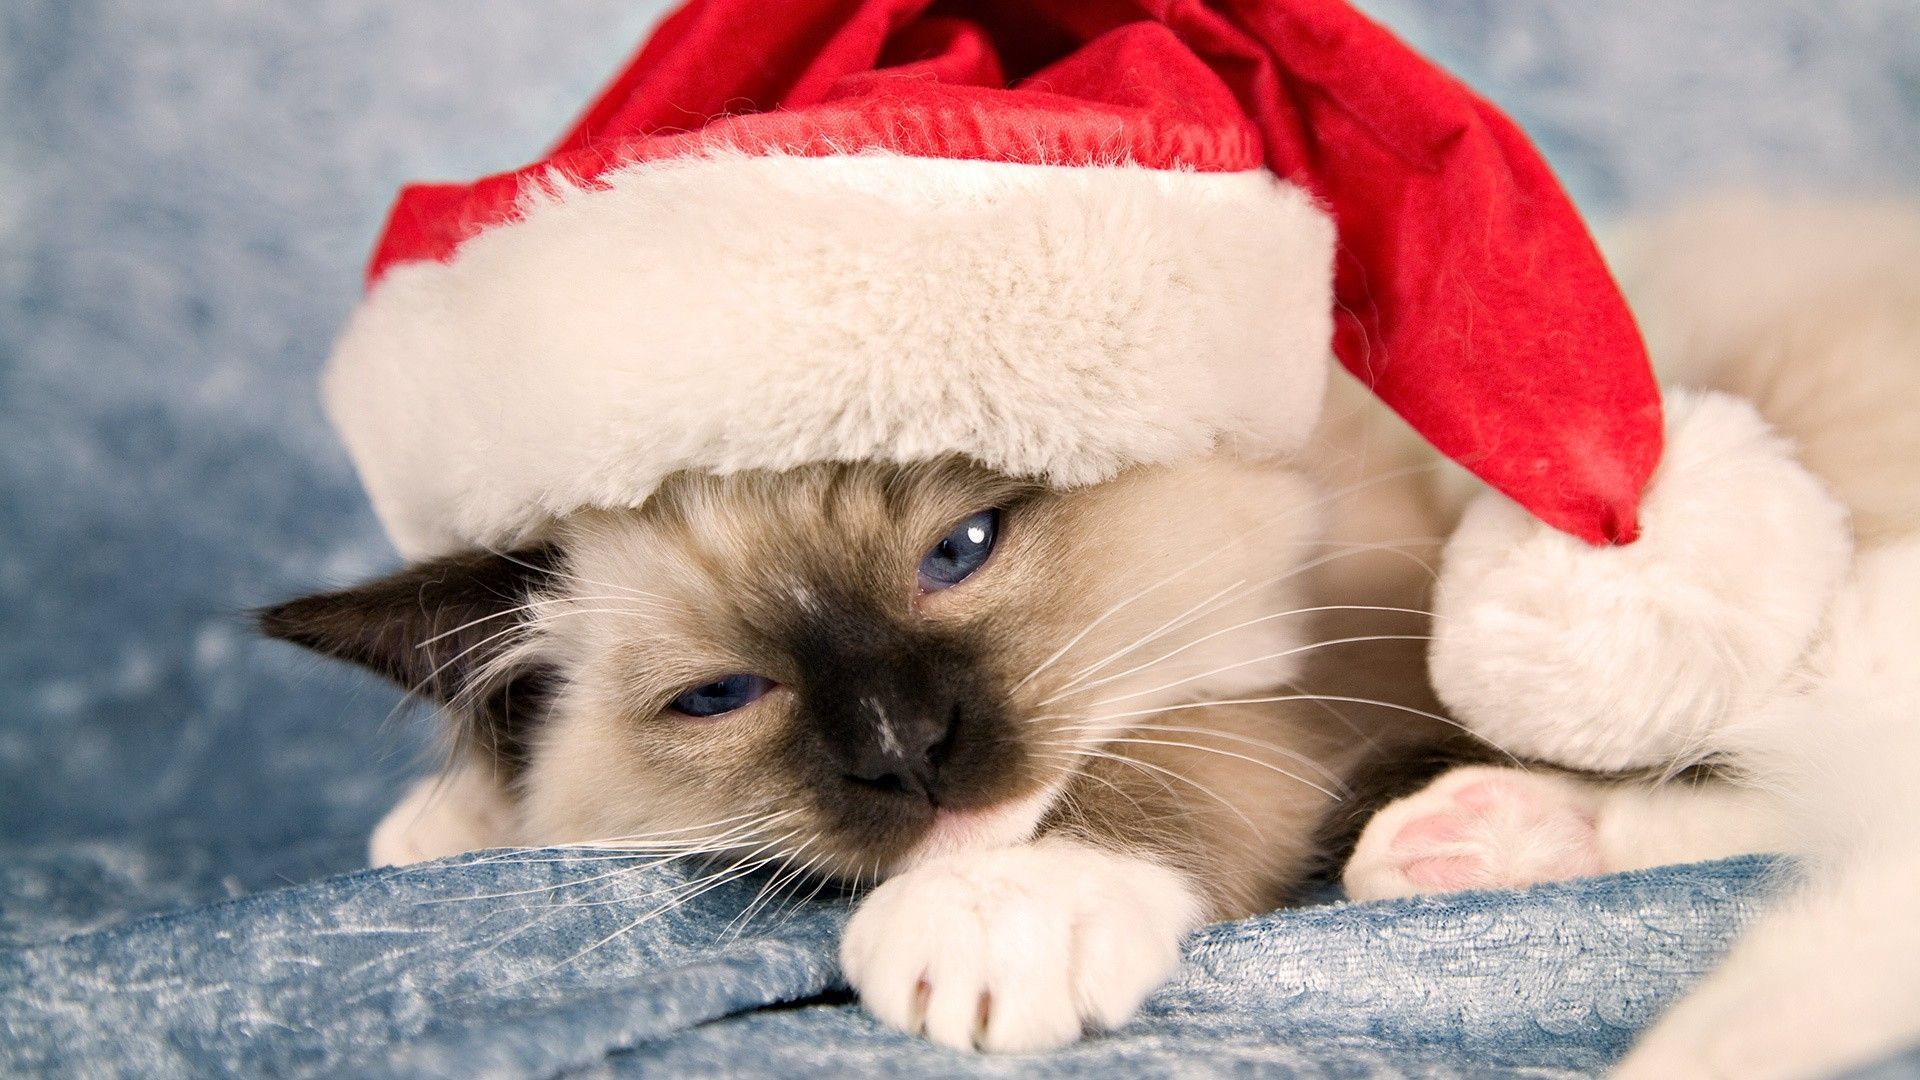 grumpy cat christmas. Grumpy Cat Christmas Wallpaper Desktop And iPad Grumpy Cat Christmas. Christmas cats, Funny cat wallpaper, Grumpy cat